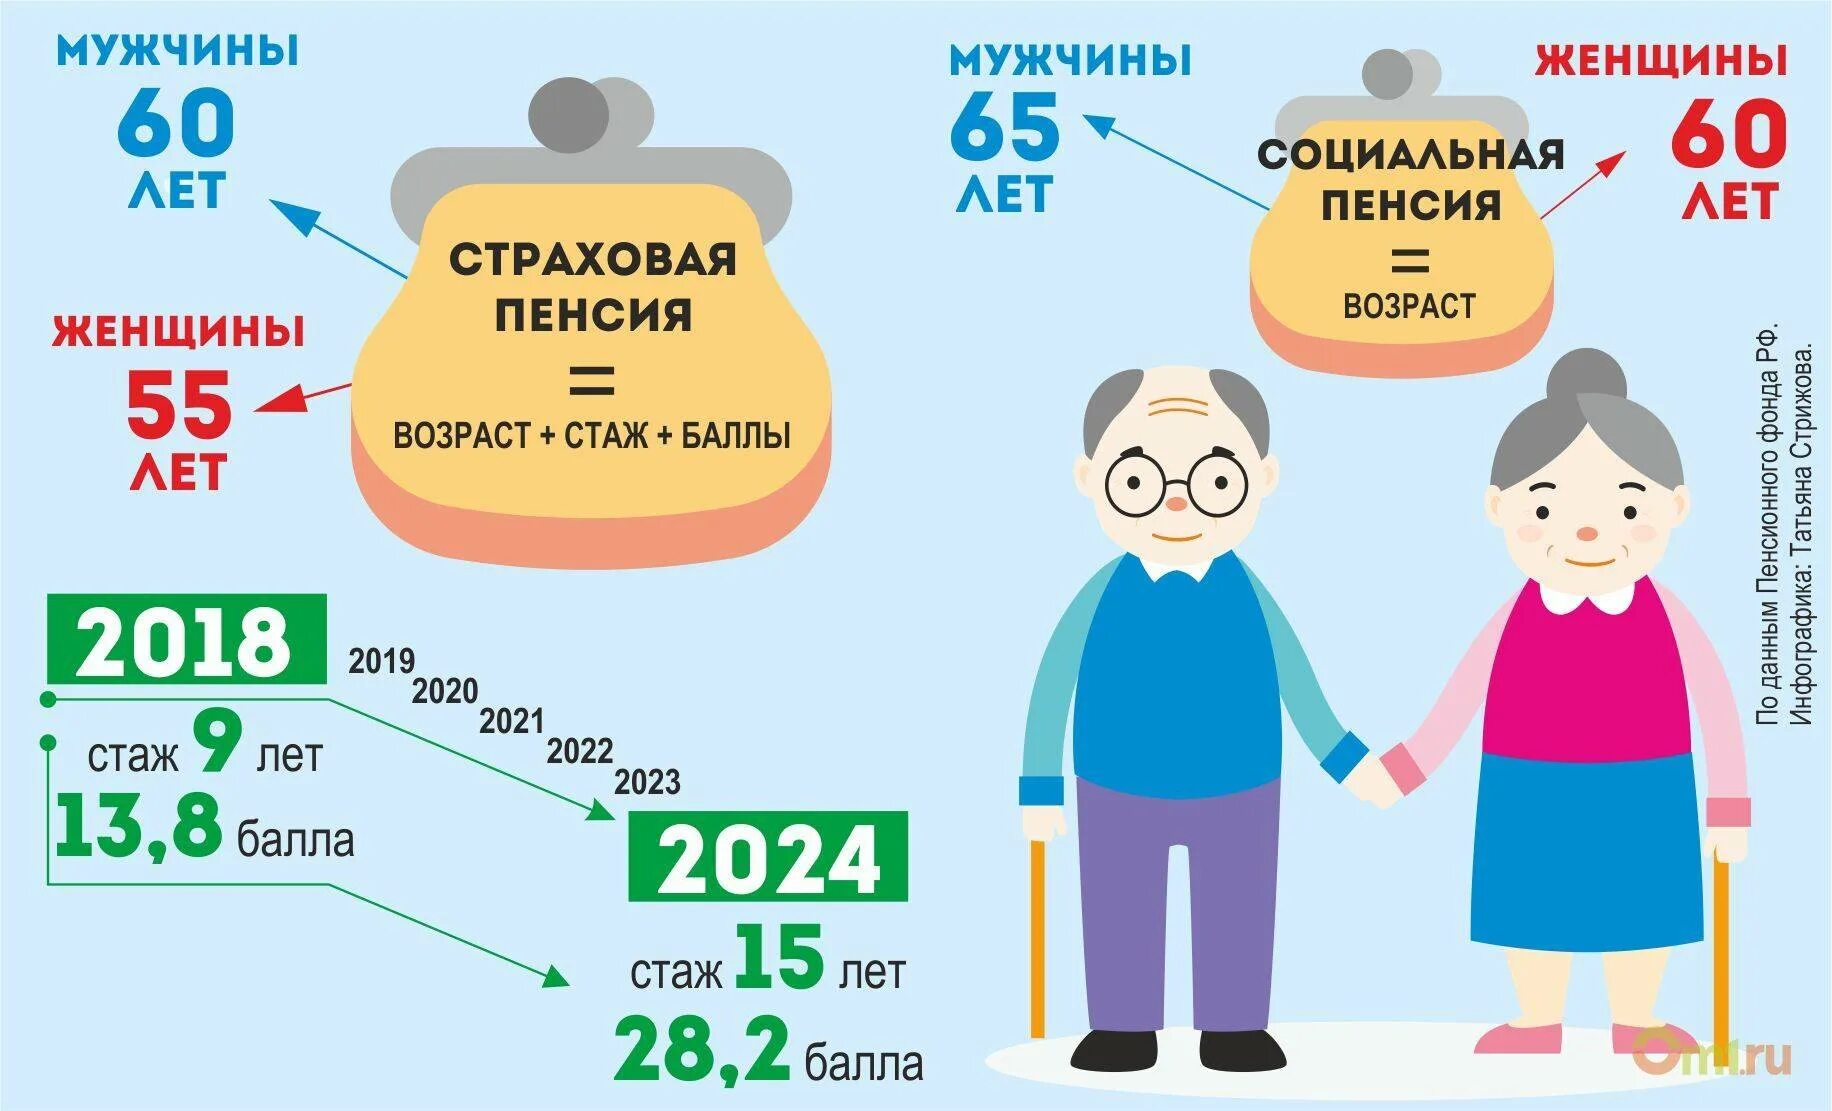 ПЕНСИЯПО старлсти возрост. Страховая пенсия по старости. Социальная пенсия по старости в 2021. Социальная пенстя постарлст.